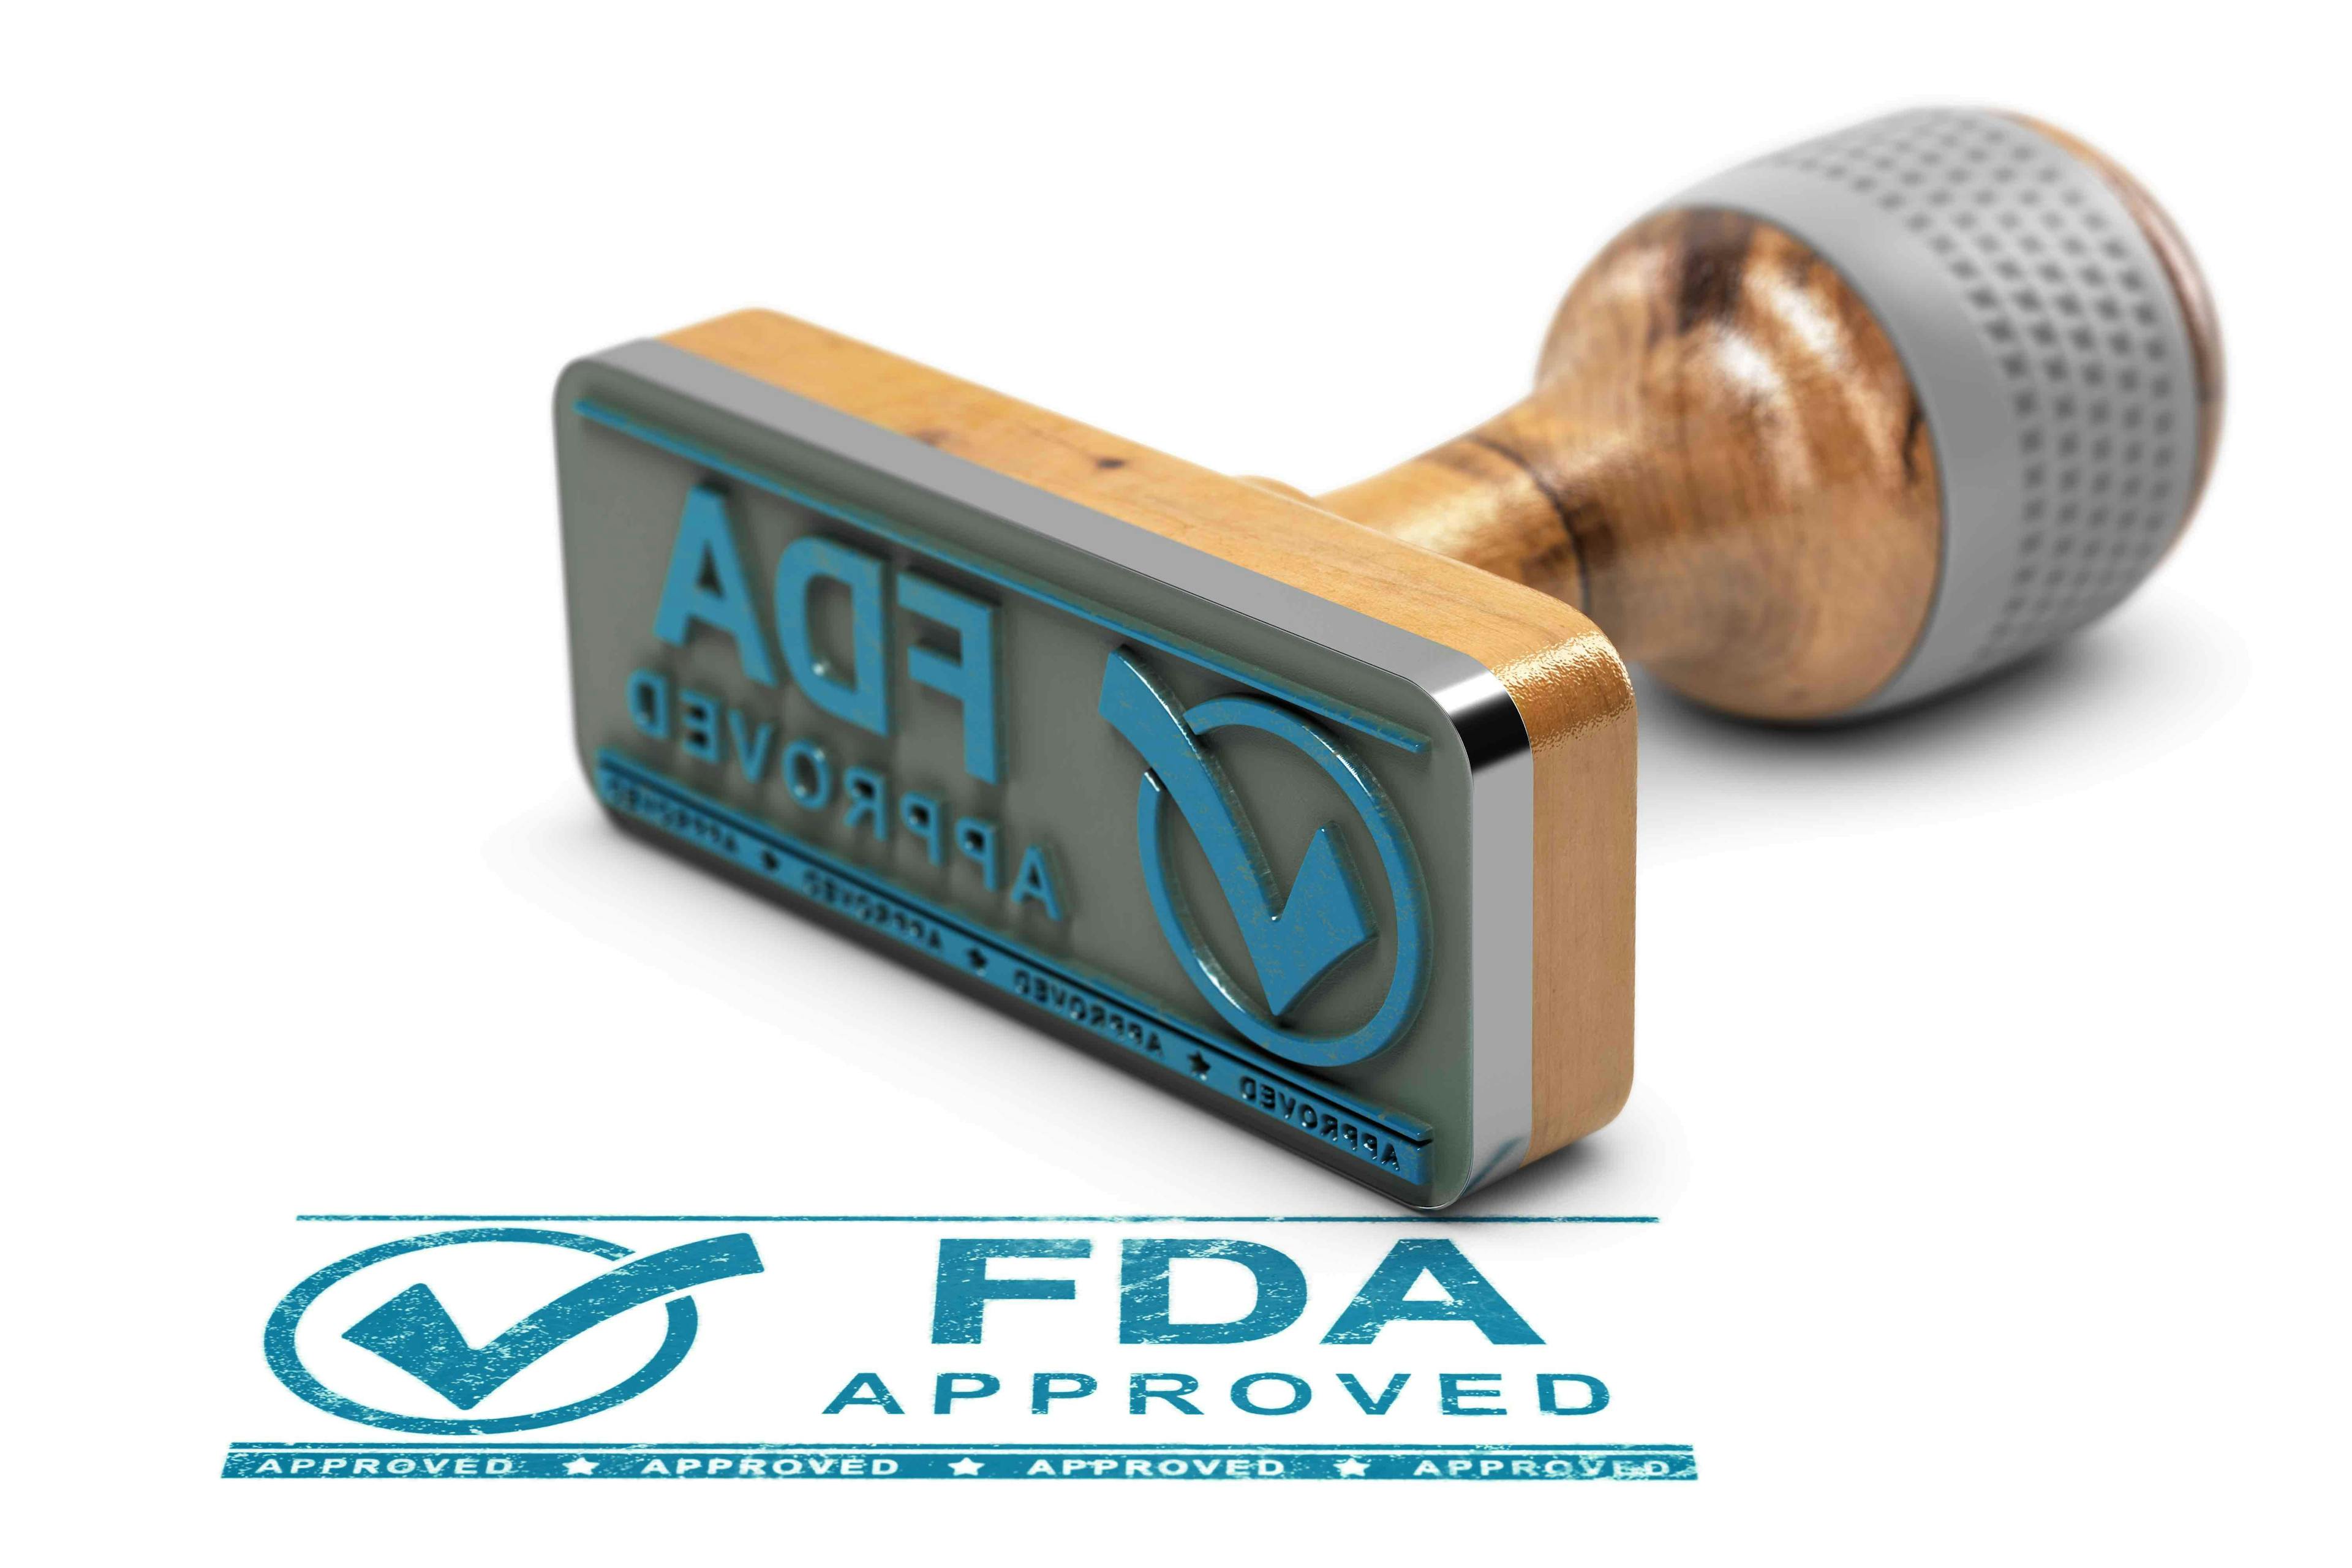 Blue FDA approved stamp | Image credit: Olivier Le Moal - stock.adobe.com